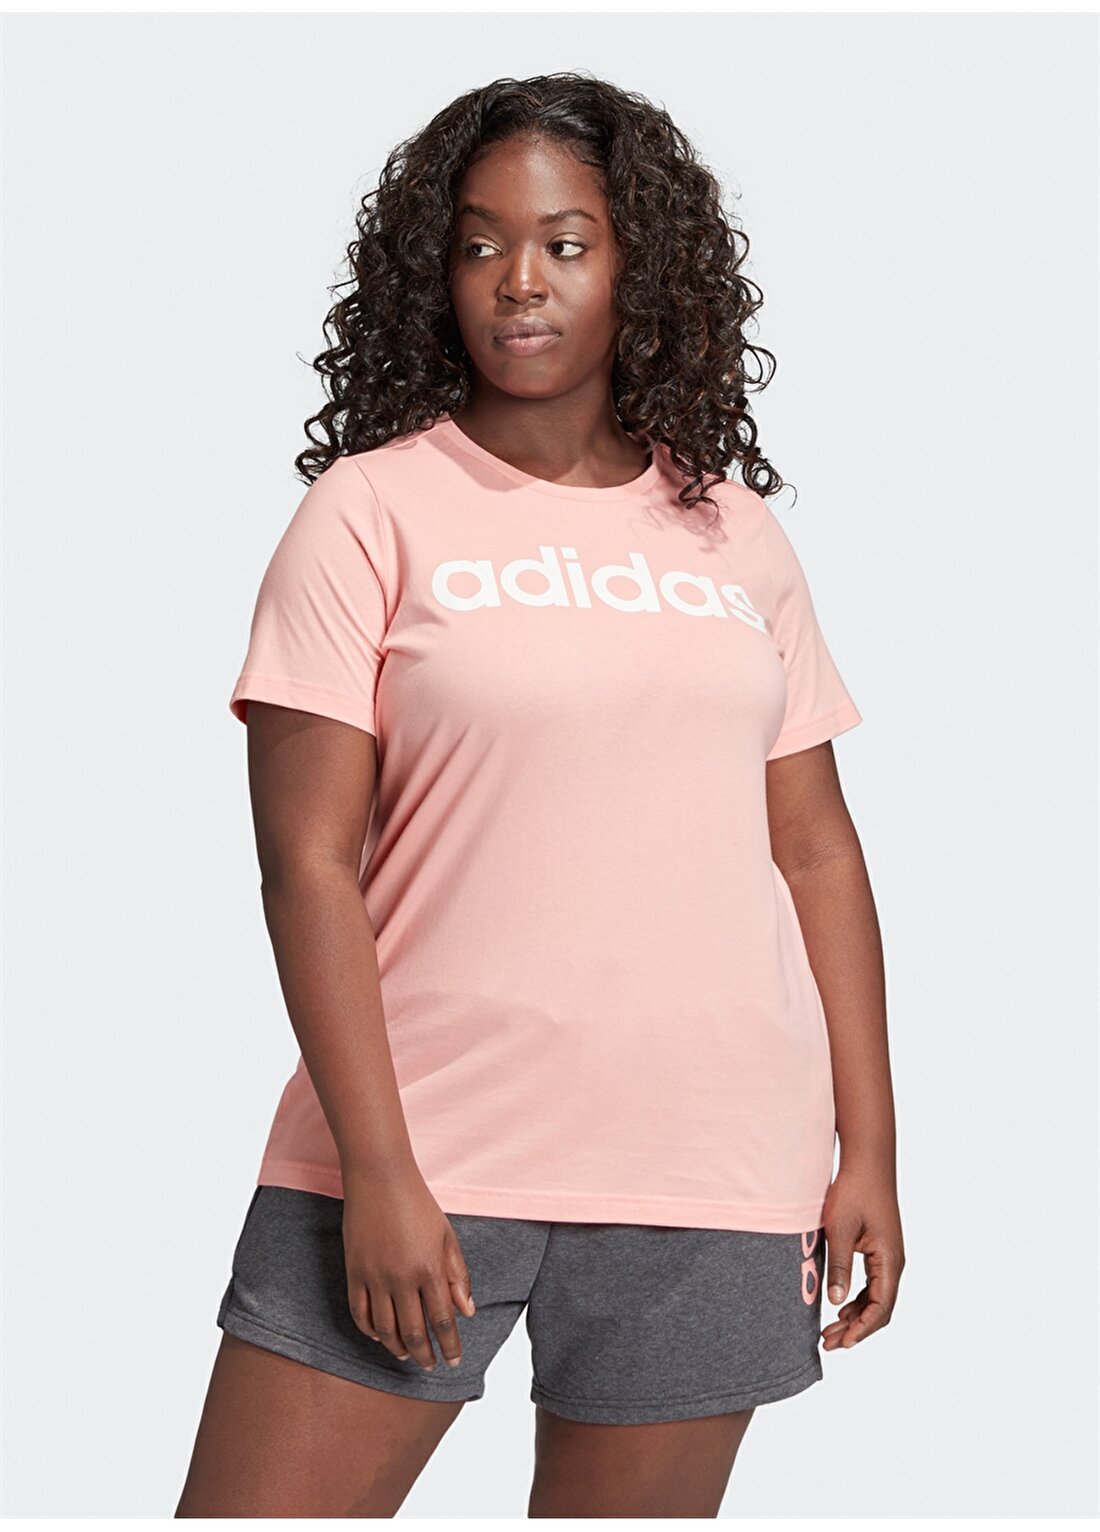 Adidas Essentials Inclusive-Sizing T-Shirt